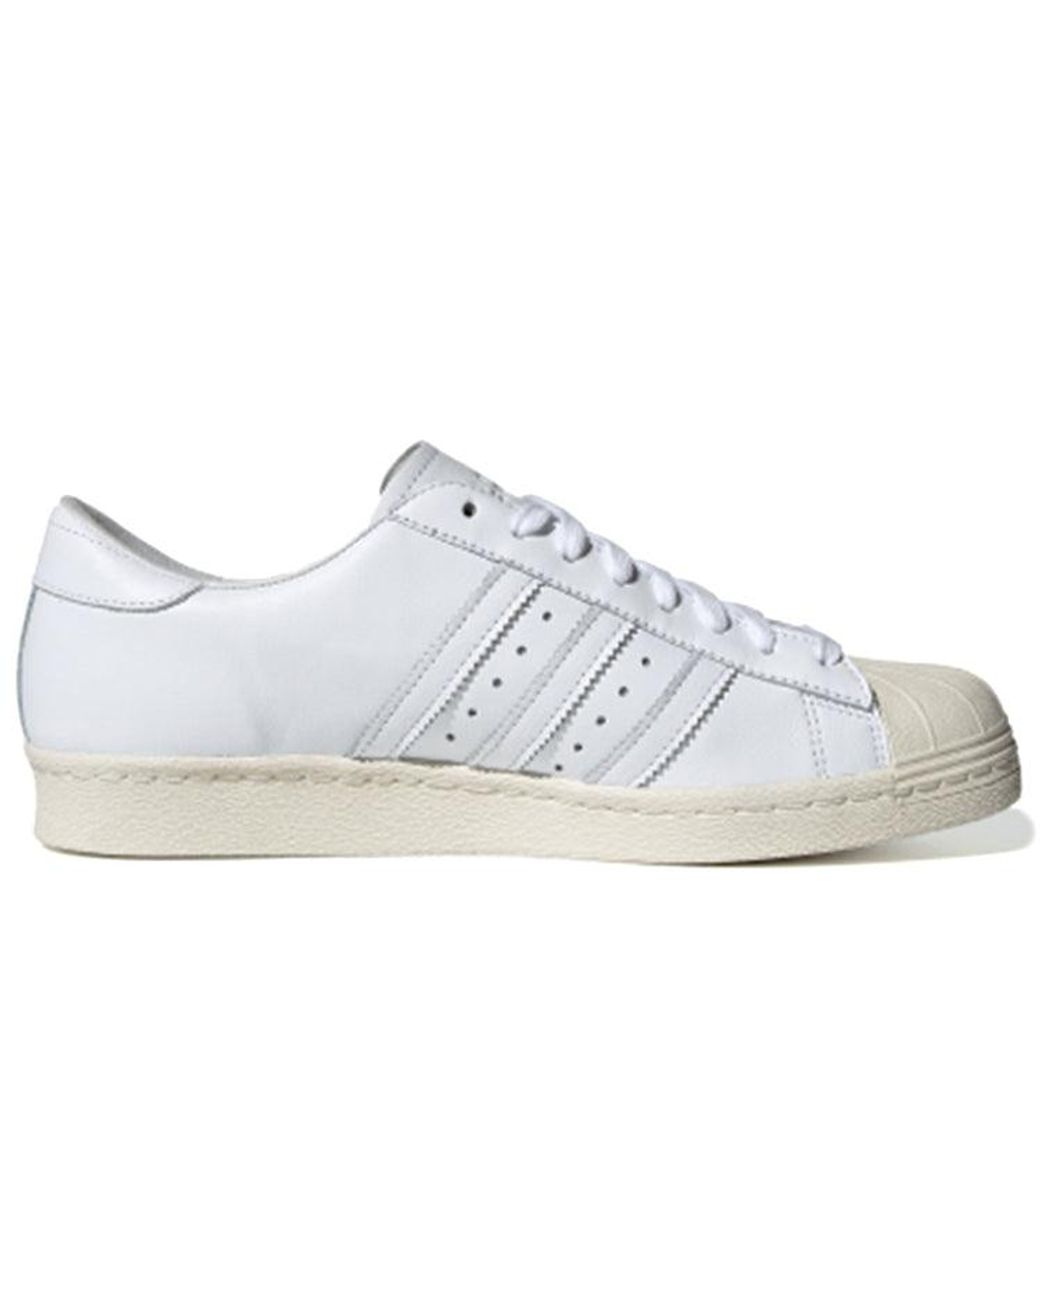 Alegre dos Perth Blackborough adidas Originals Adidas Superstar 80s Recon 'footwear White' for Men | Lyst